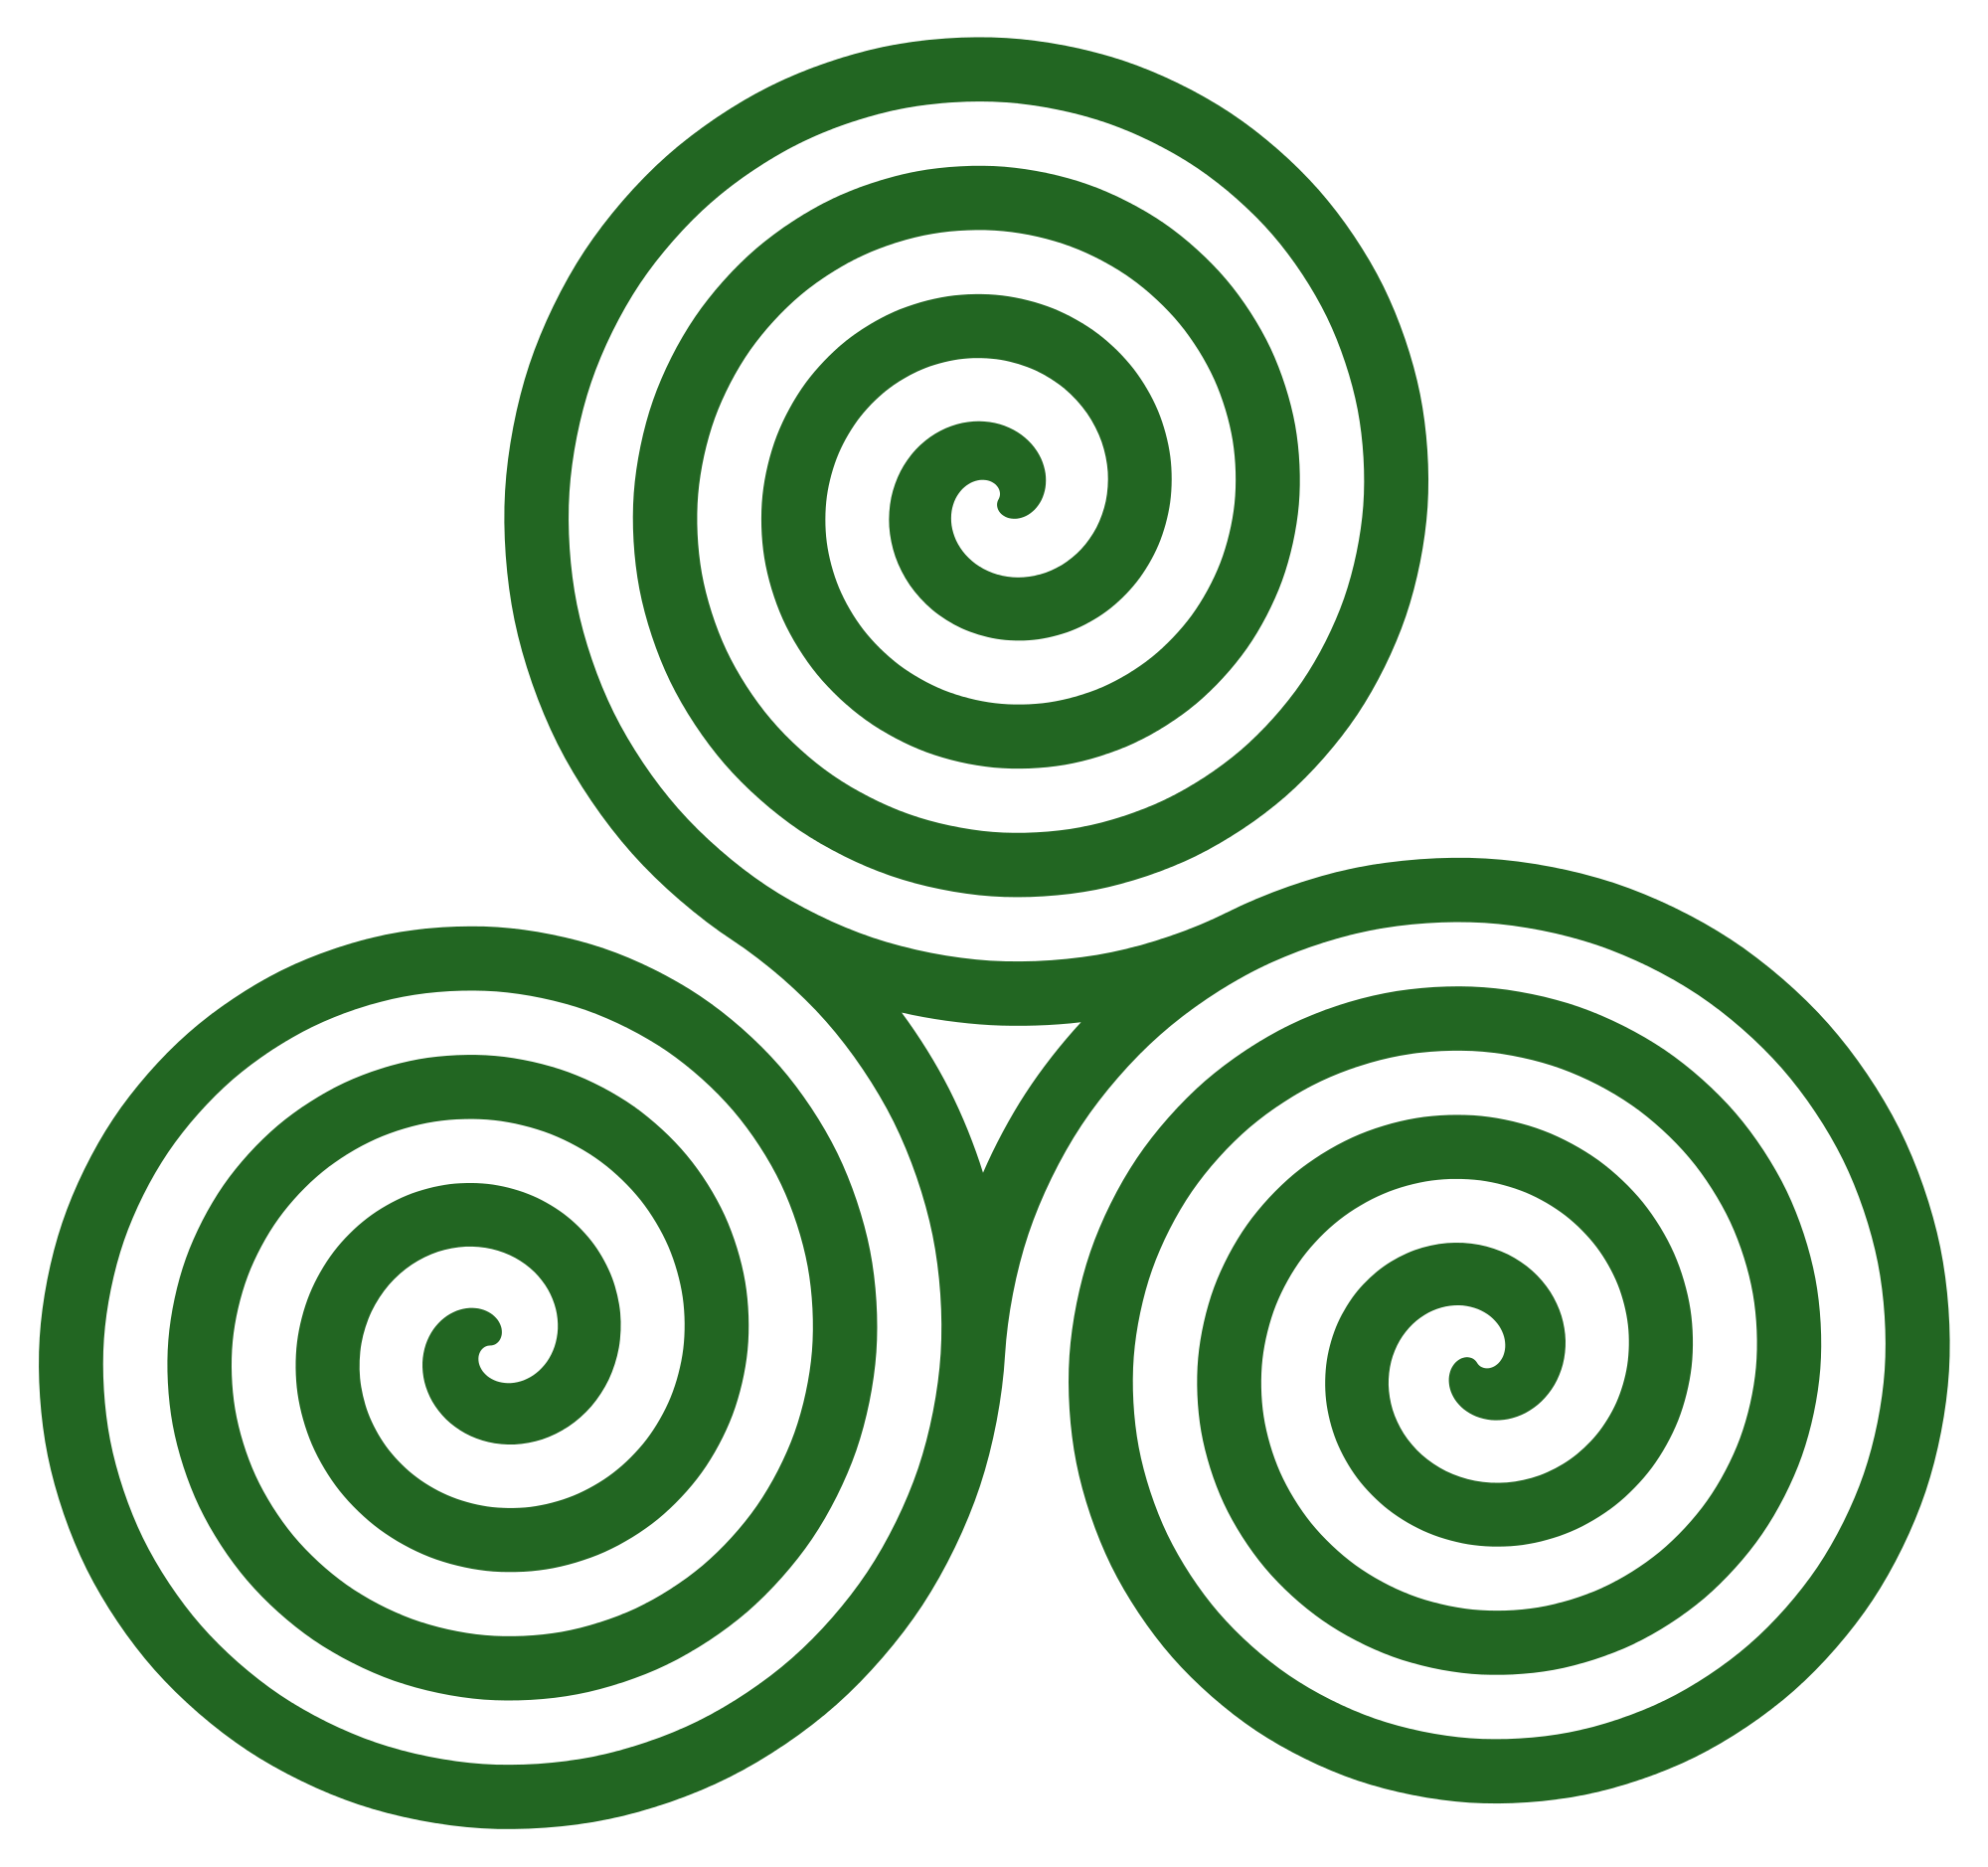 Символ трех времен. Трискелион кельты. Трискелион Кельтский. Кельтский символ Трискелион. Кельтская тройная спираль.